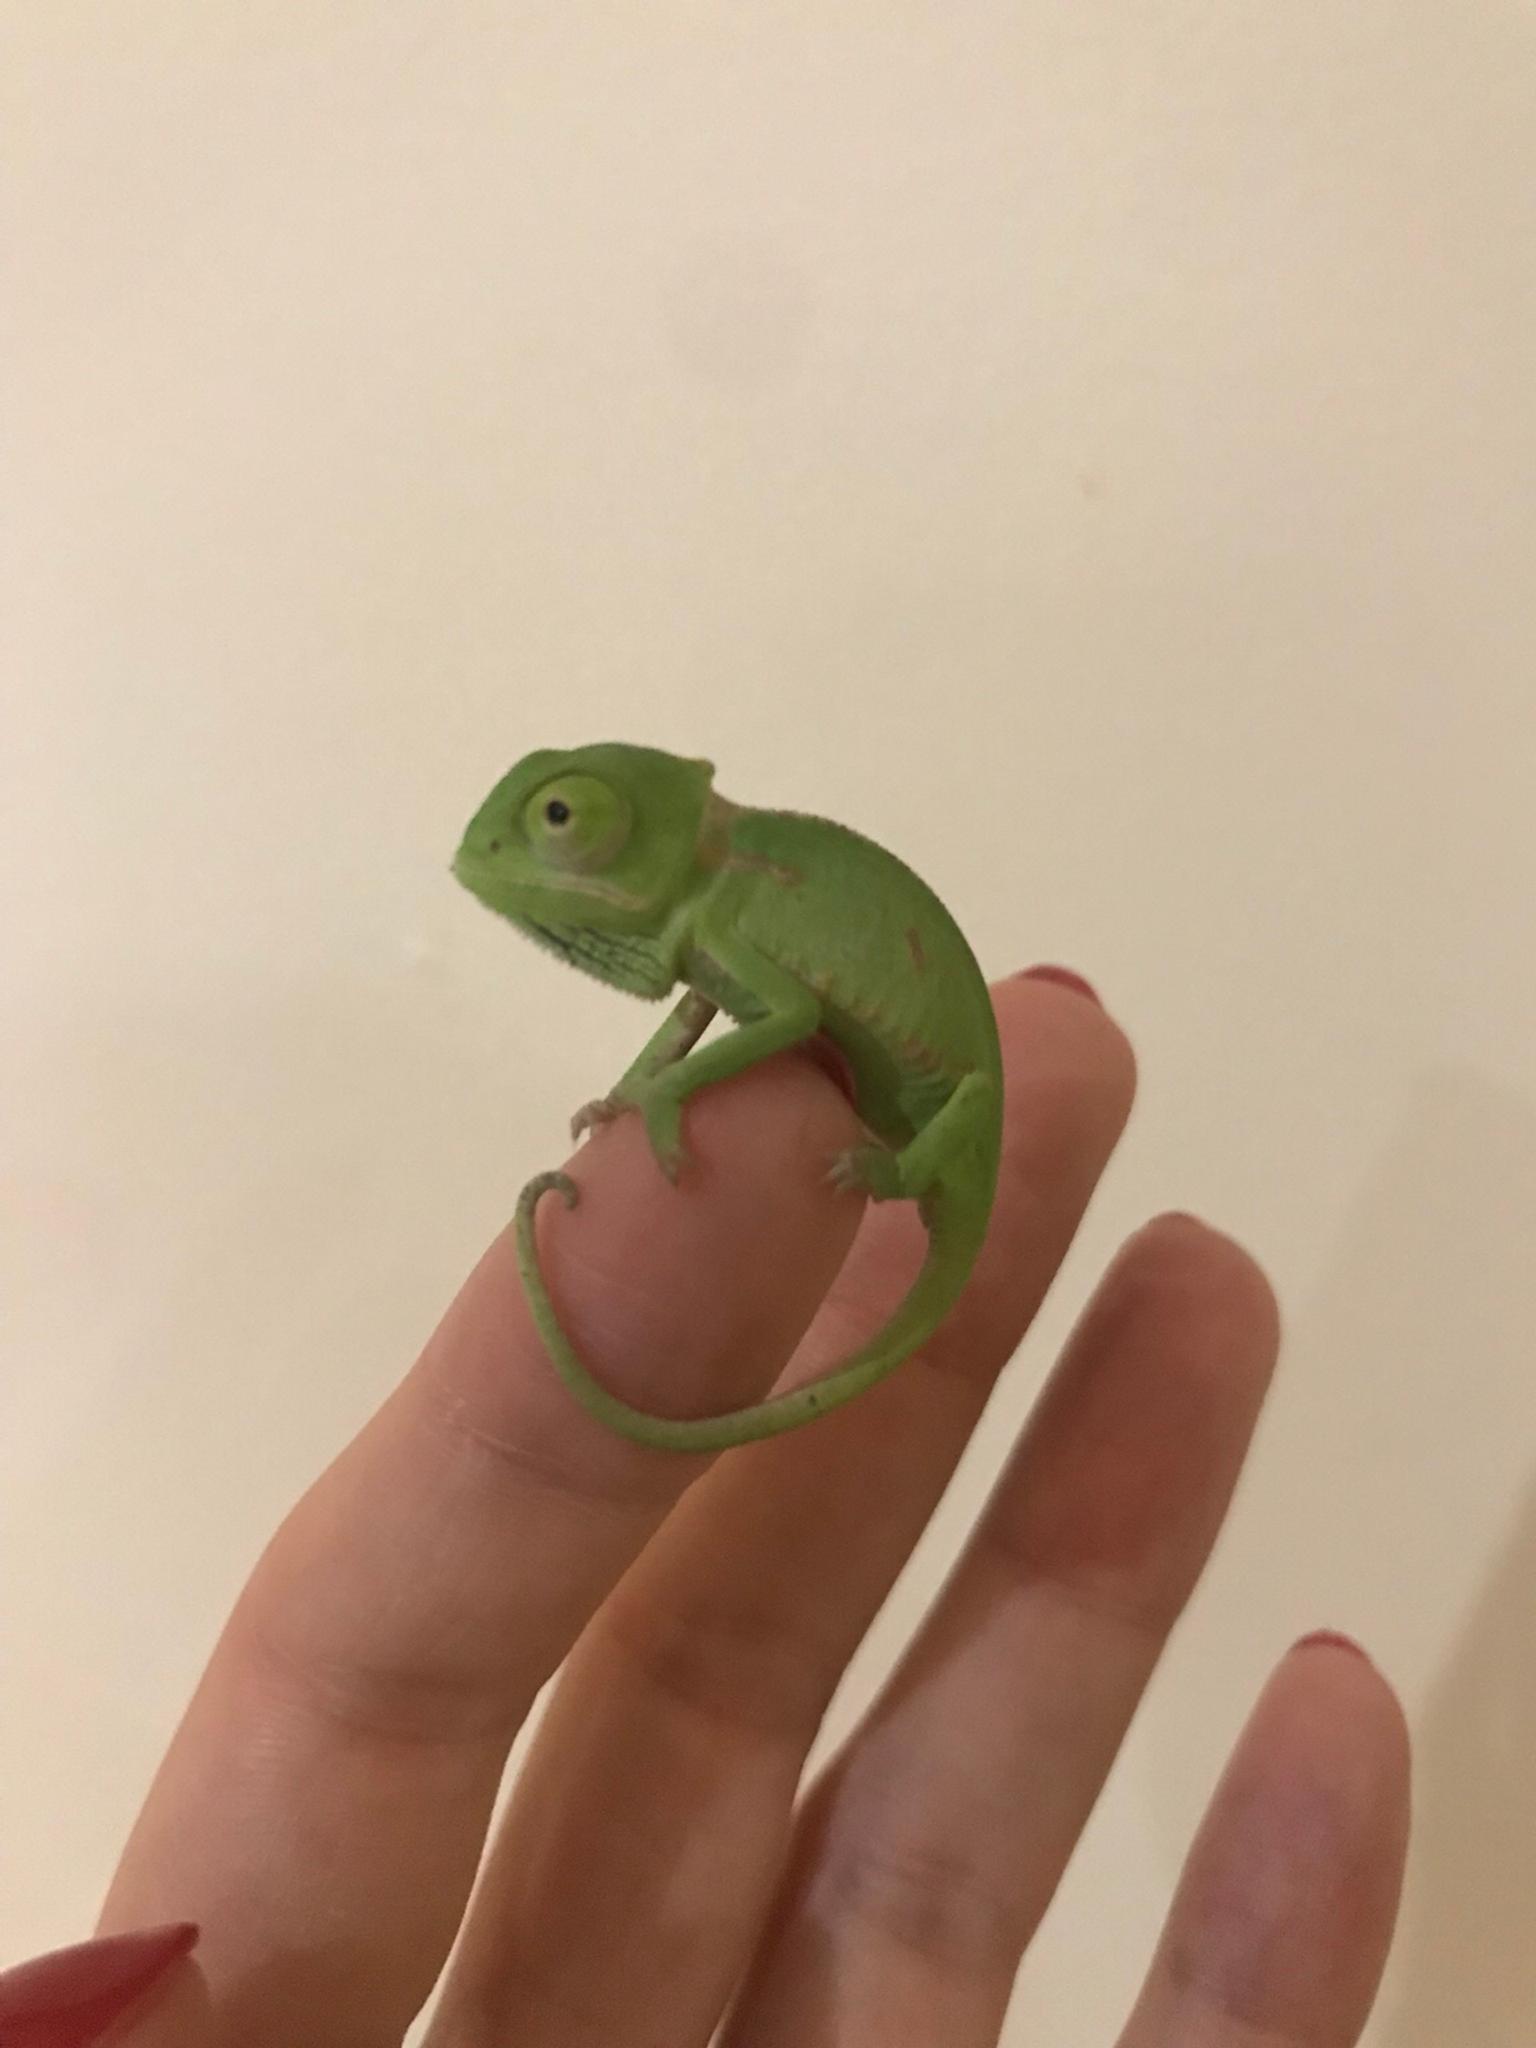 Baby chameleon for sale in UB6 London for £35.00 for sale | Shpock